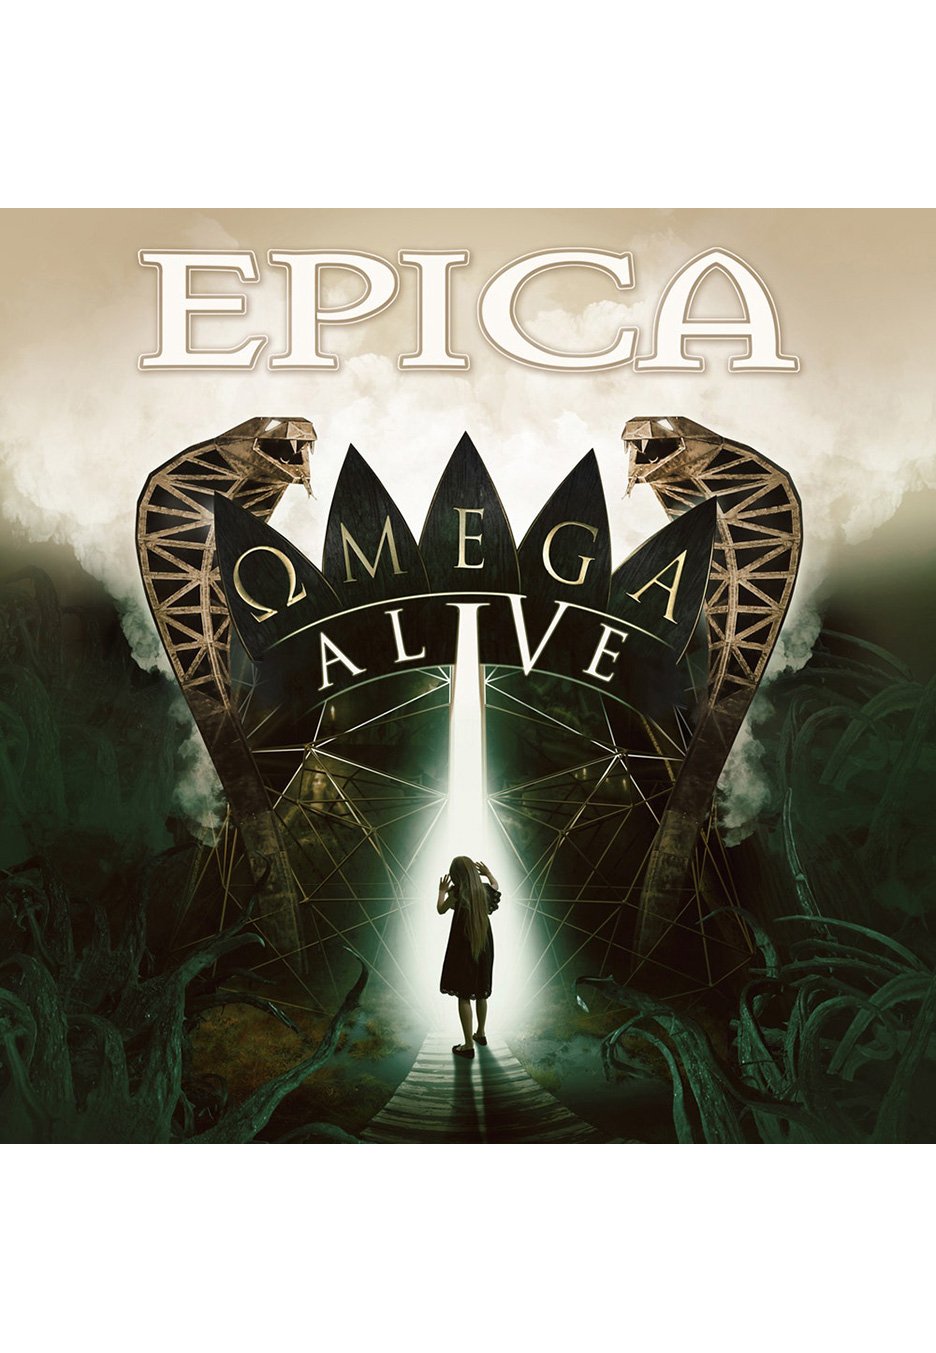 Epica - Omega Alive - Earbook